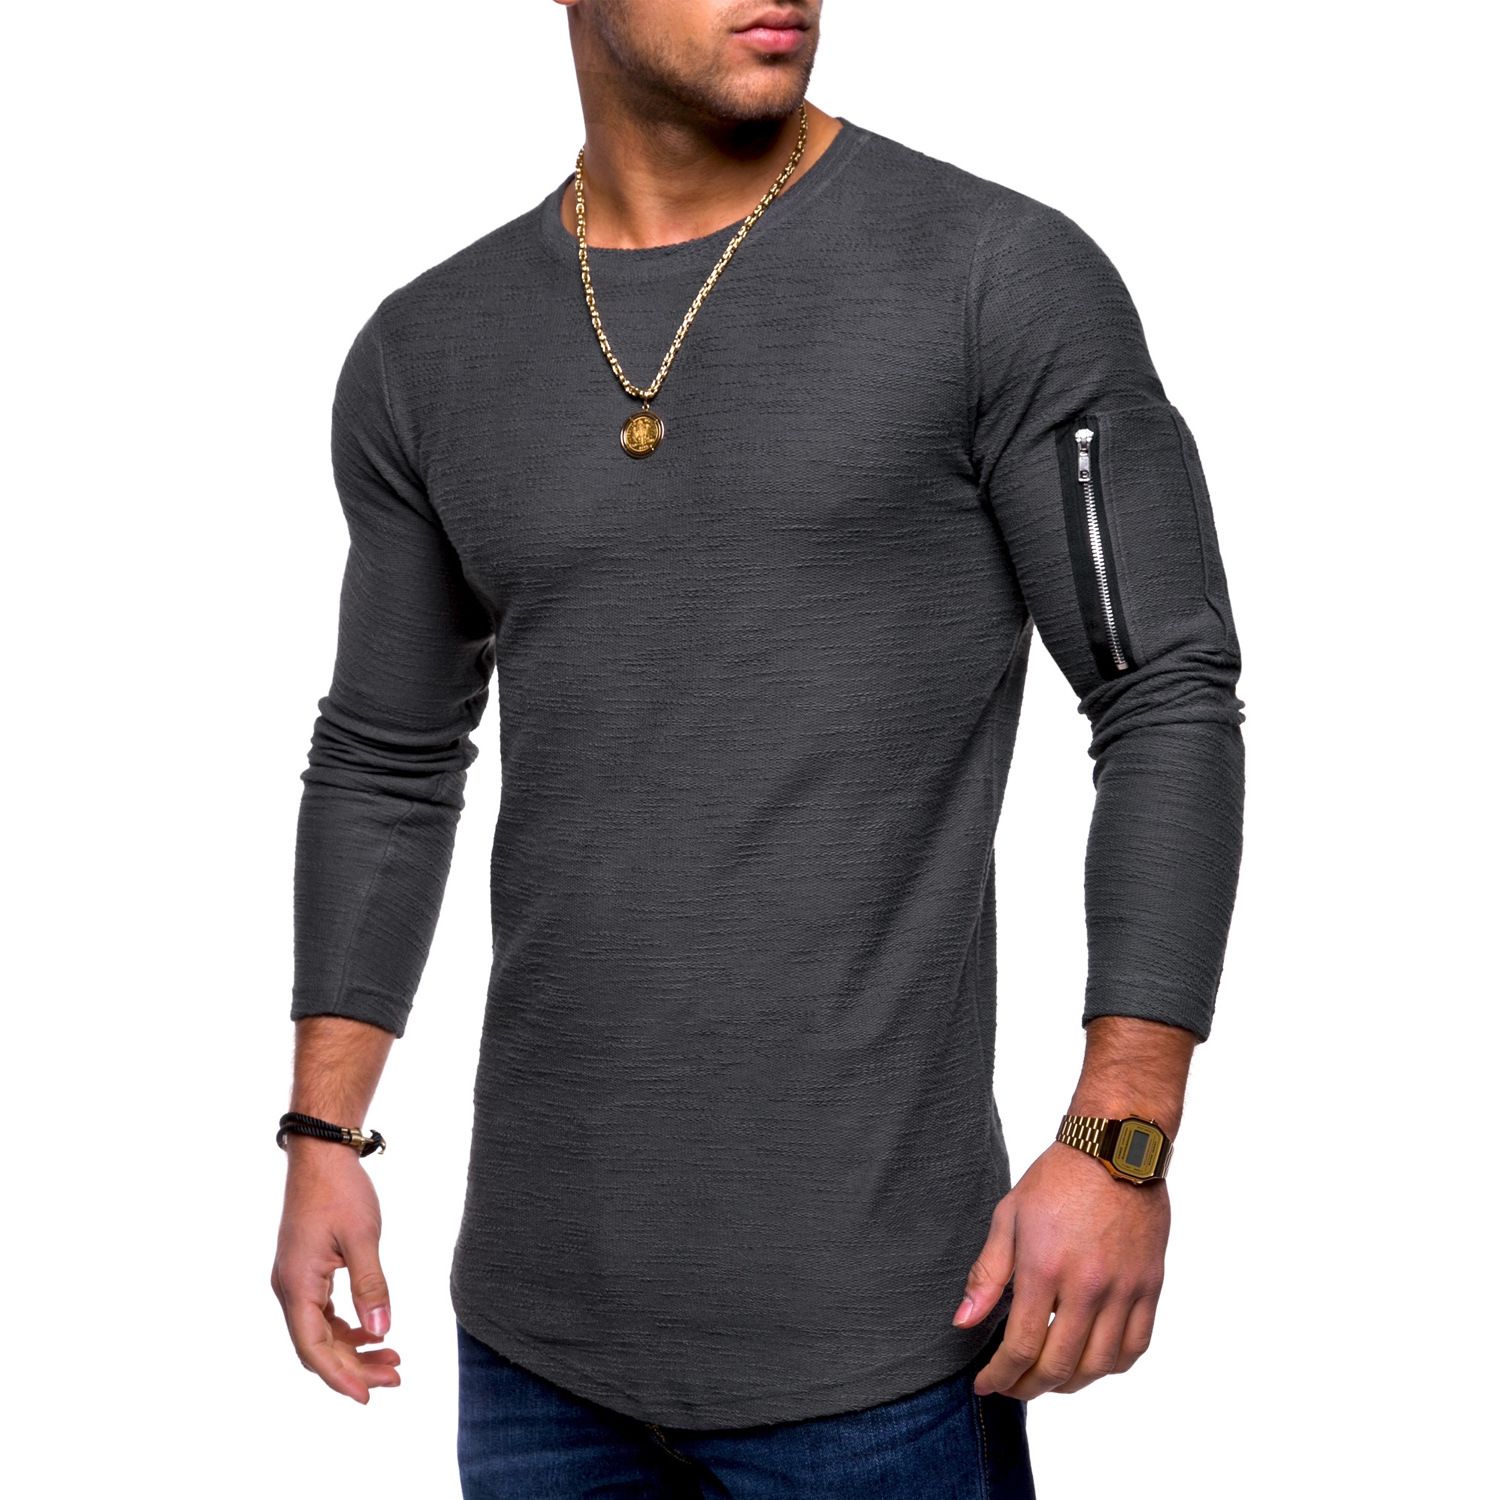 Designer Mens Tshirt Long Sleeve New 2019 Shirt Clothing Camiseta Pocket Arms Zipper School Slim Plus Size Spring Tops From Betty9907, $18.18 | DHgate.Com